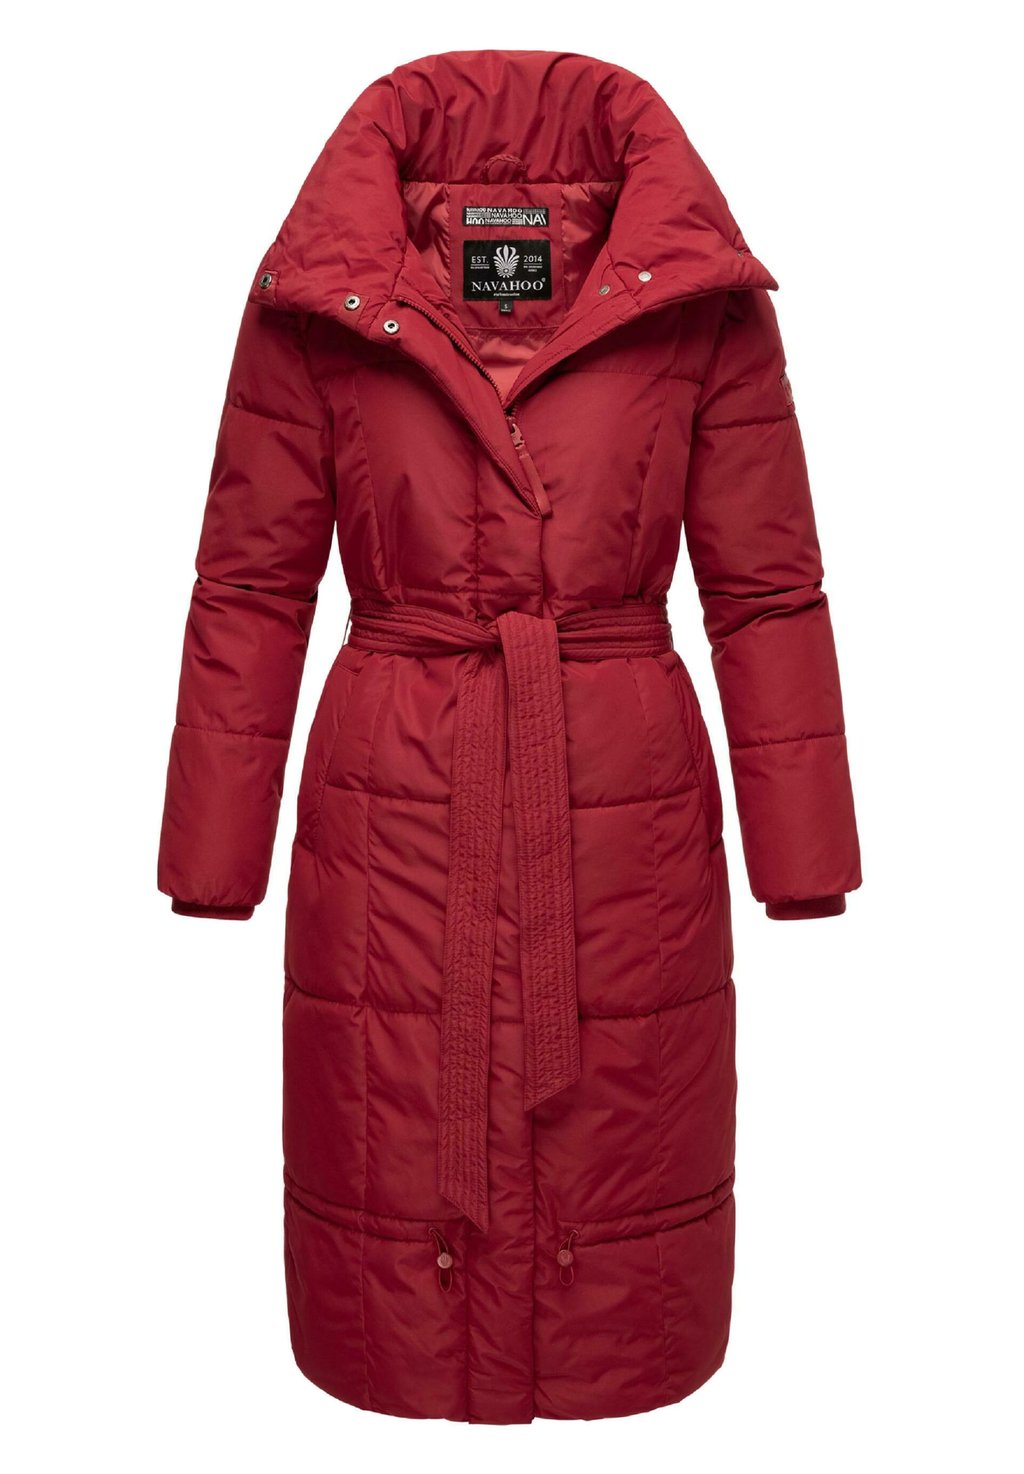 Зимнее пальто Mirenaa Navahoo, цвет dark red